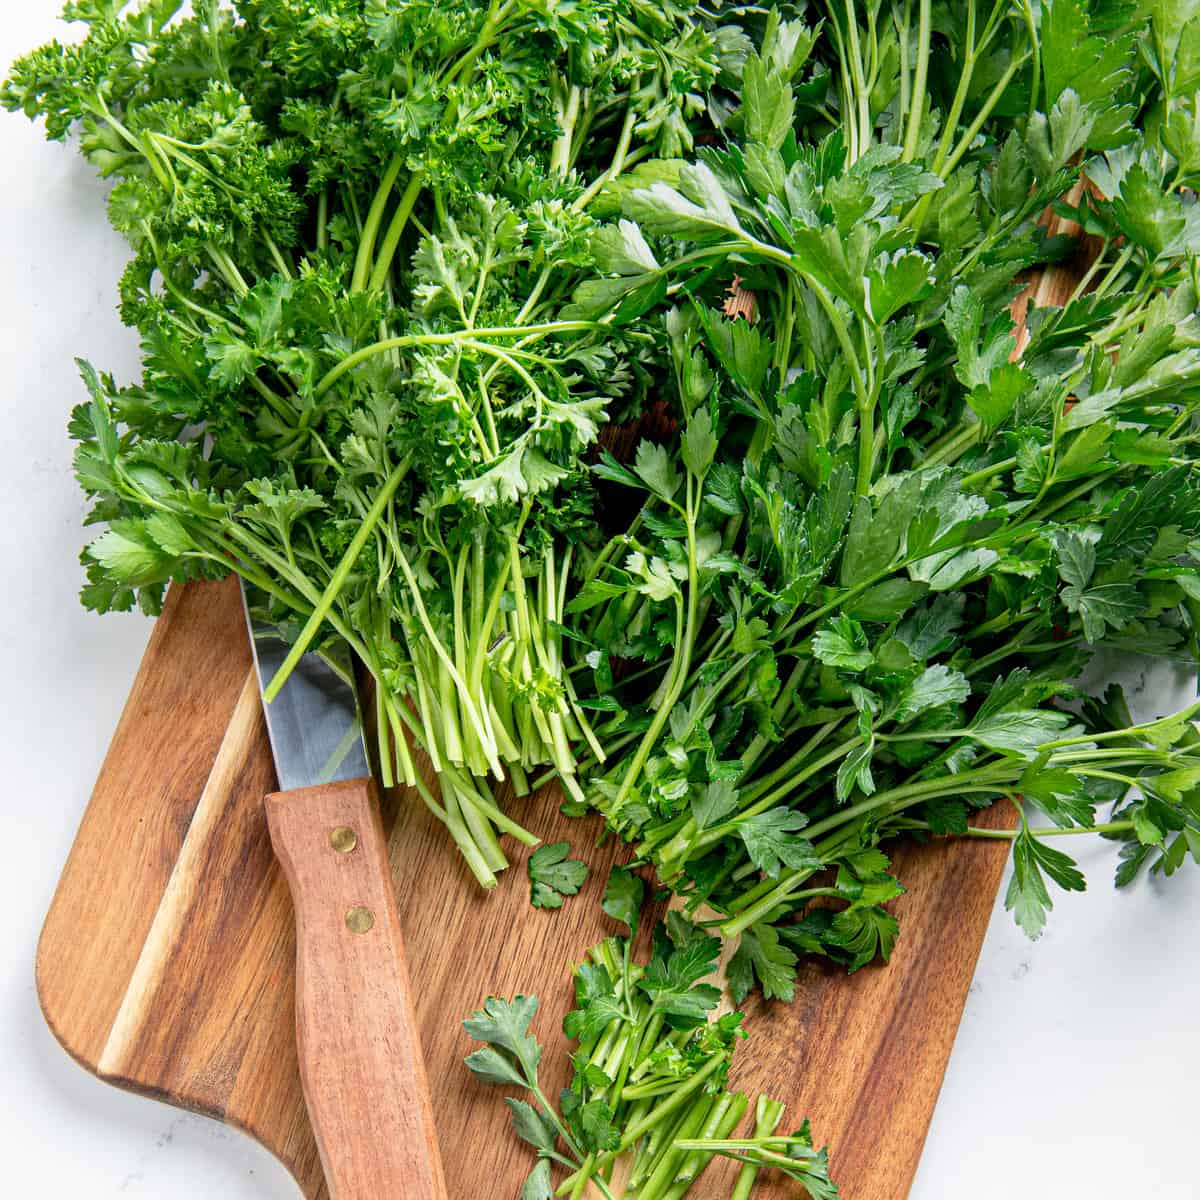 Trimmed parsley on a cutting board.